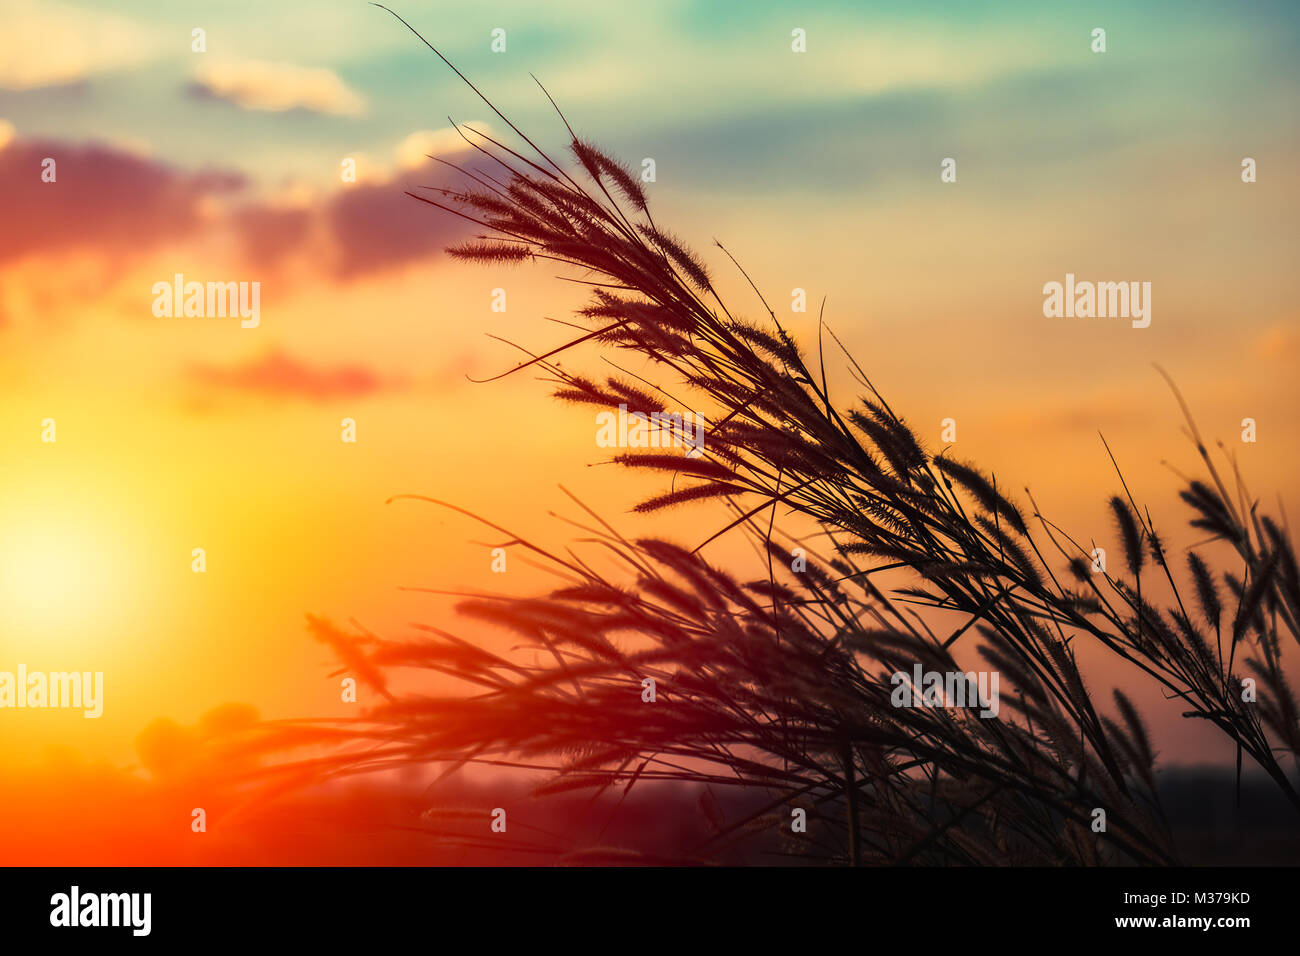 Feder Gras Blume Sonnenuntergang silhouette Landschaft Landschaft. Stockfoto